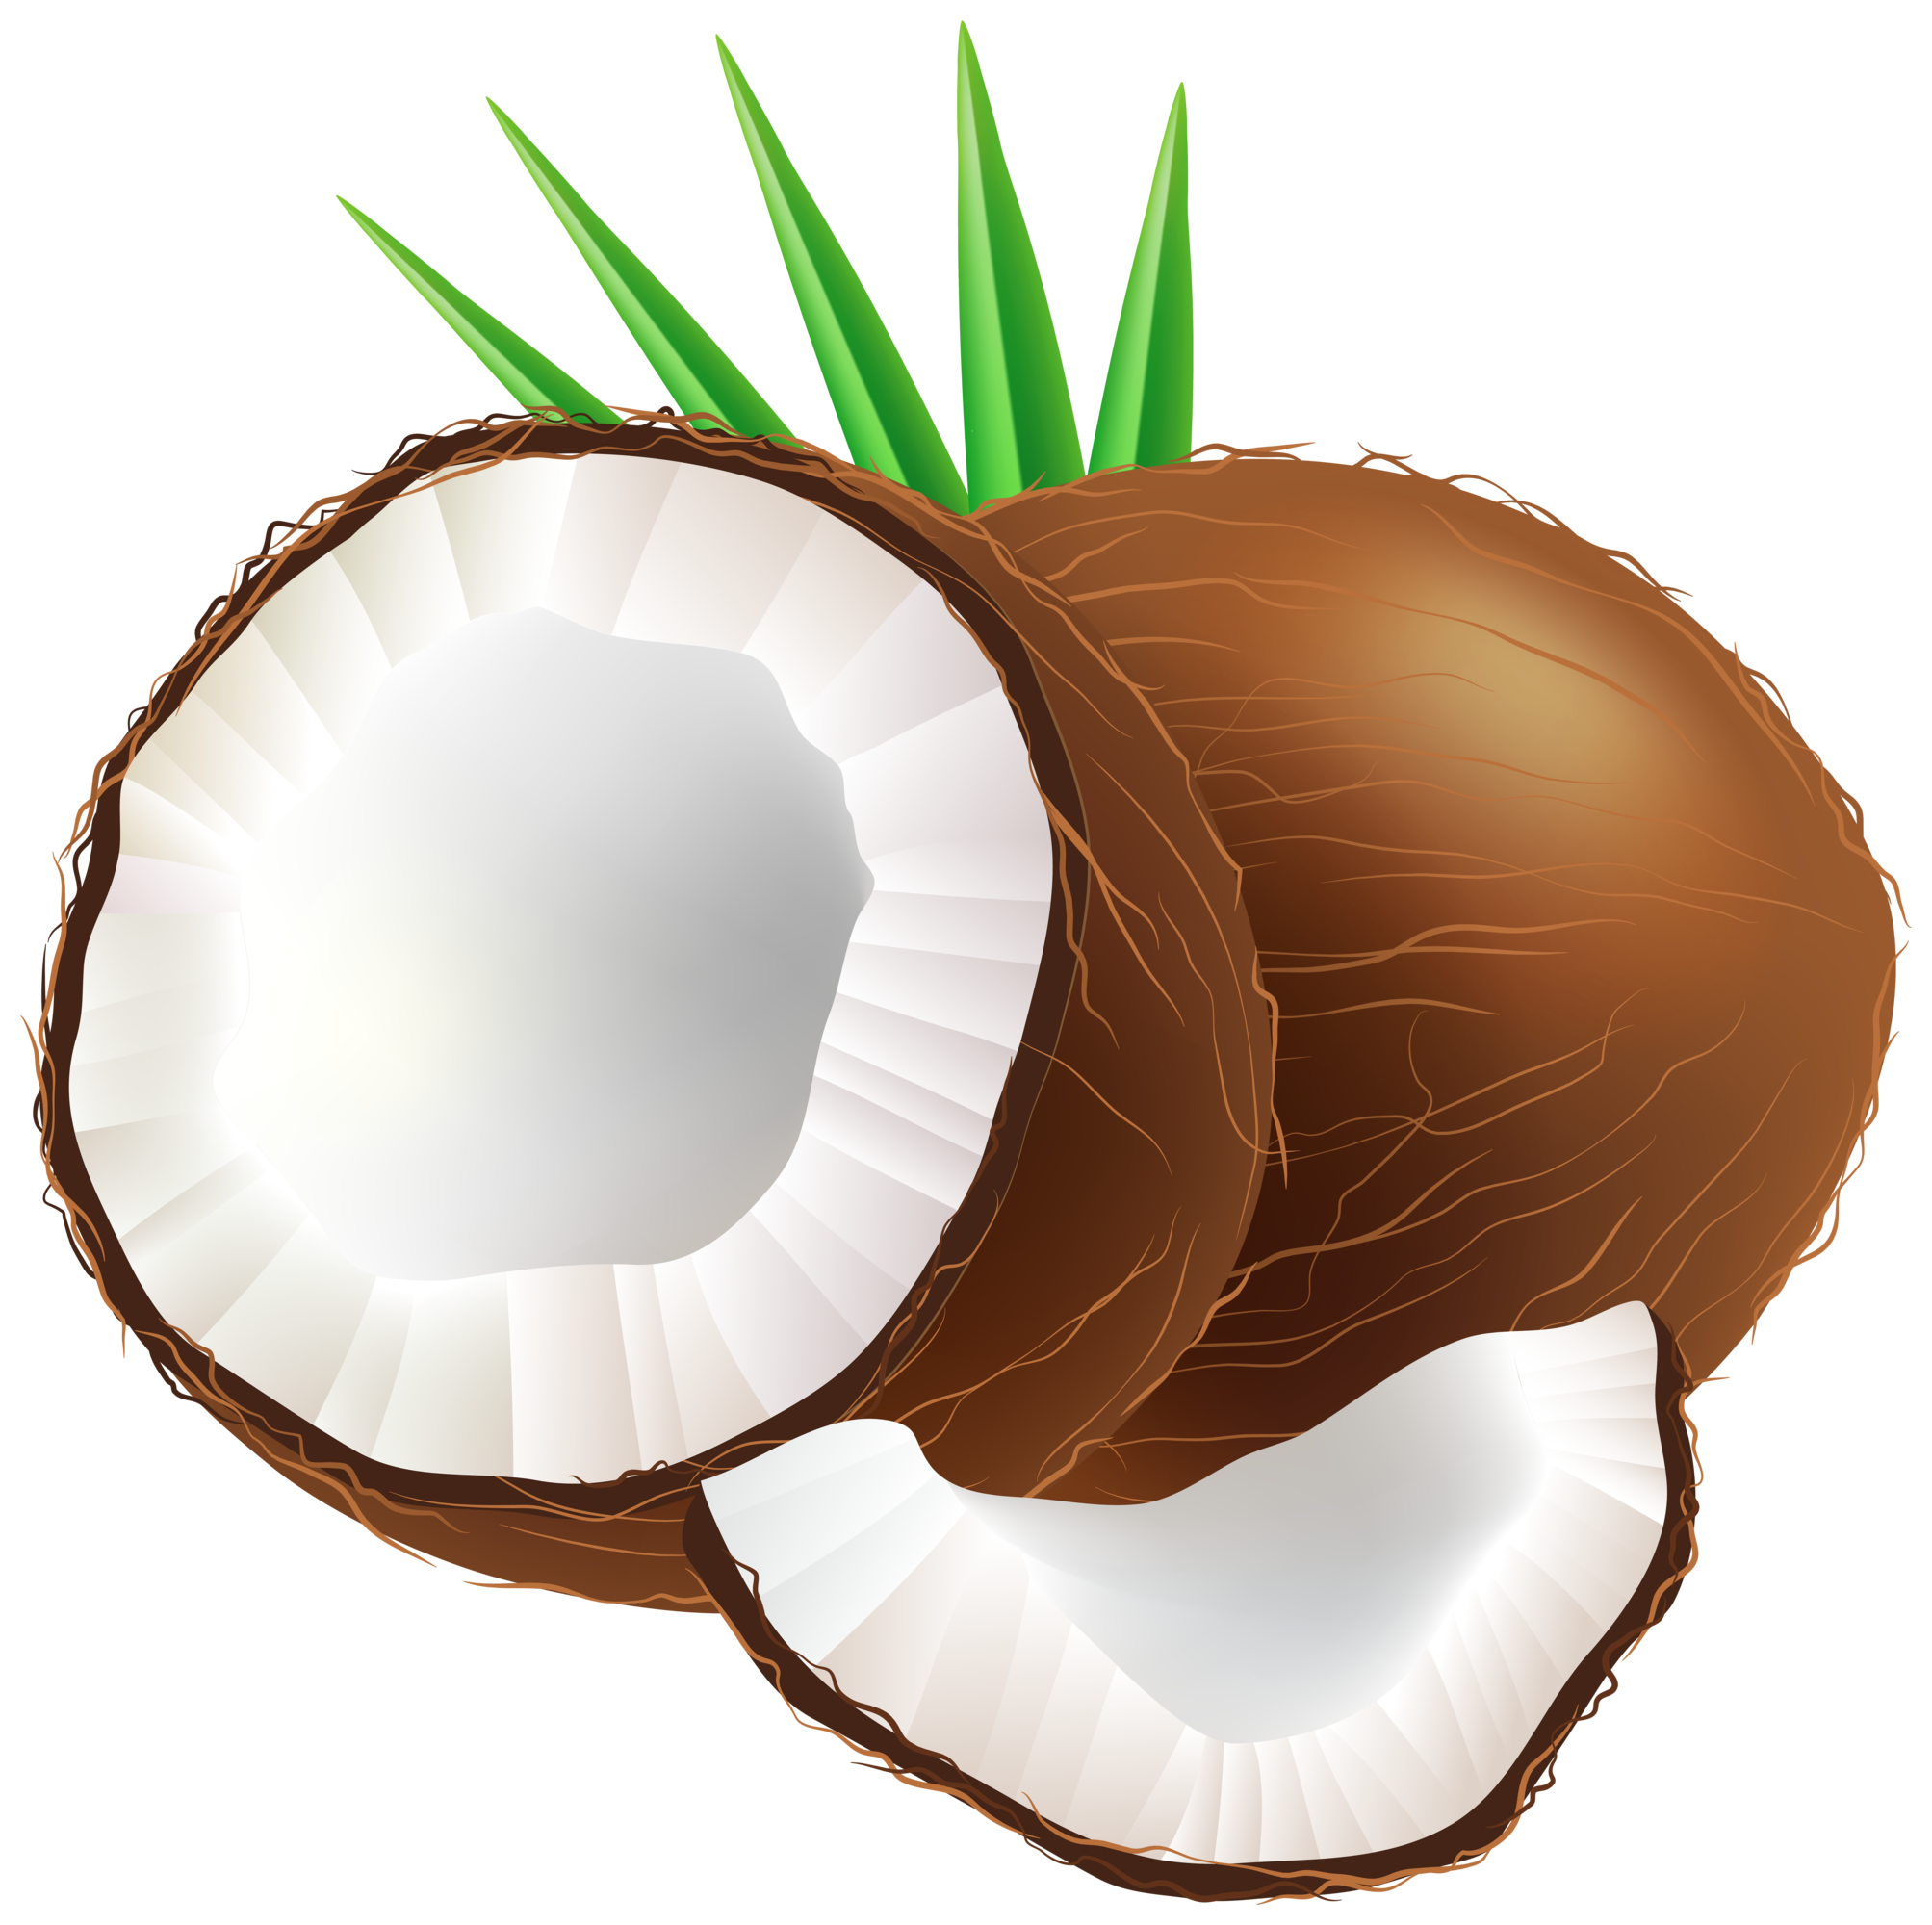 Coconut design; Half a coconu